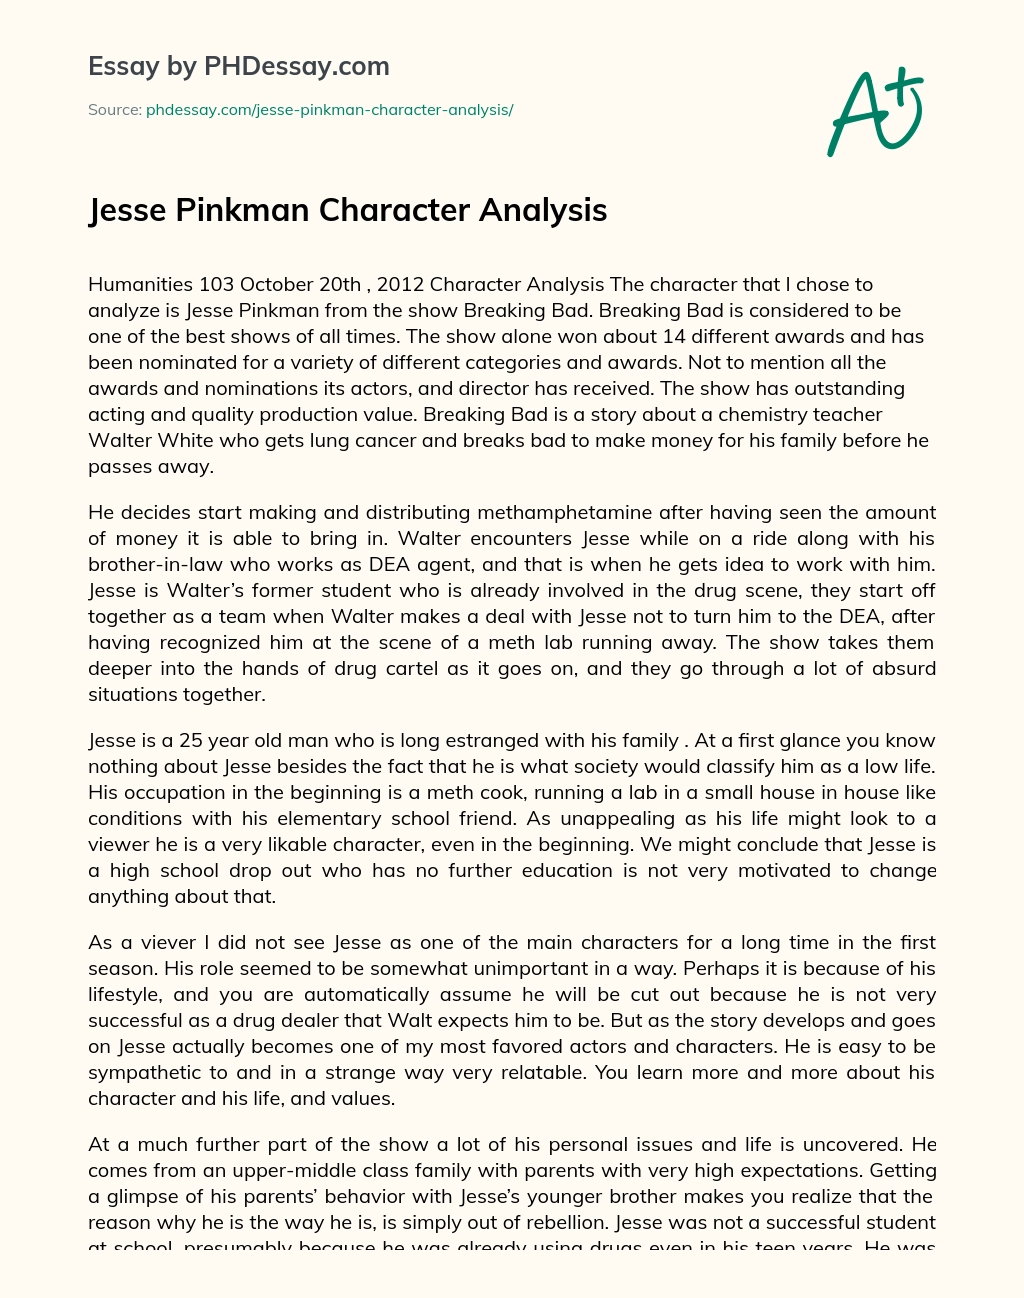 Jesse Pinkman Character Analysis essay